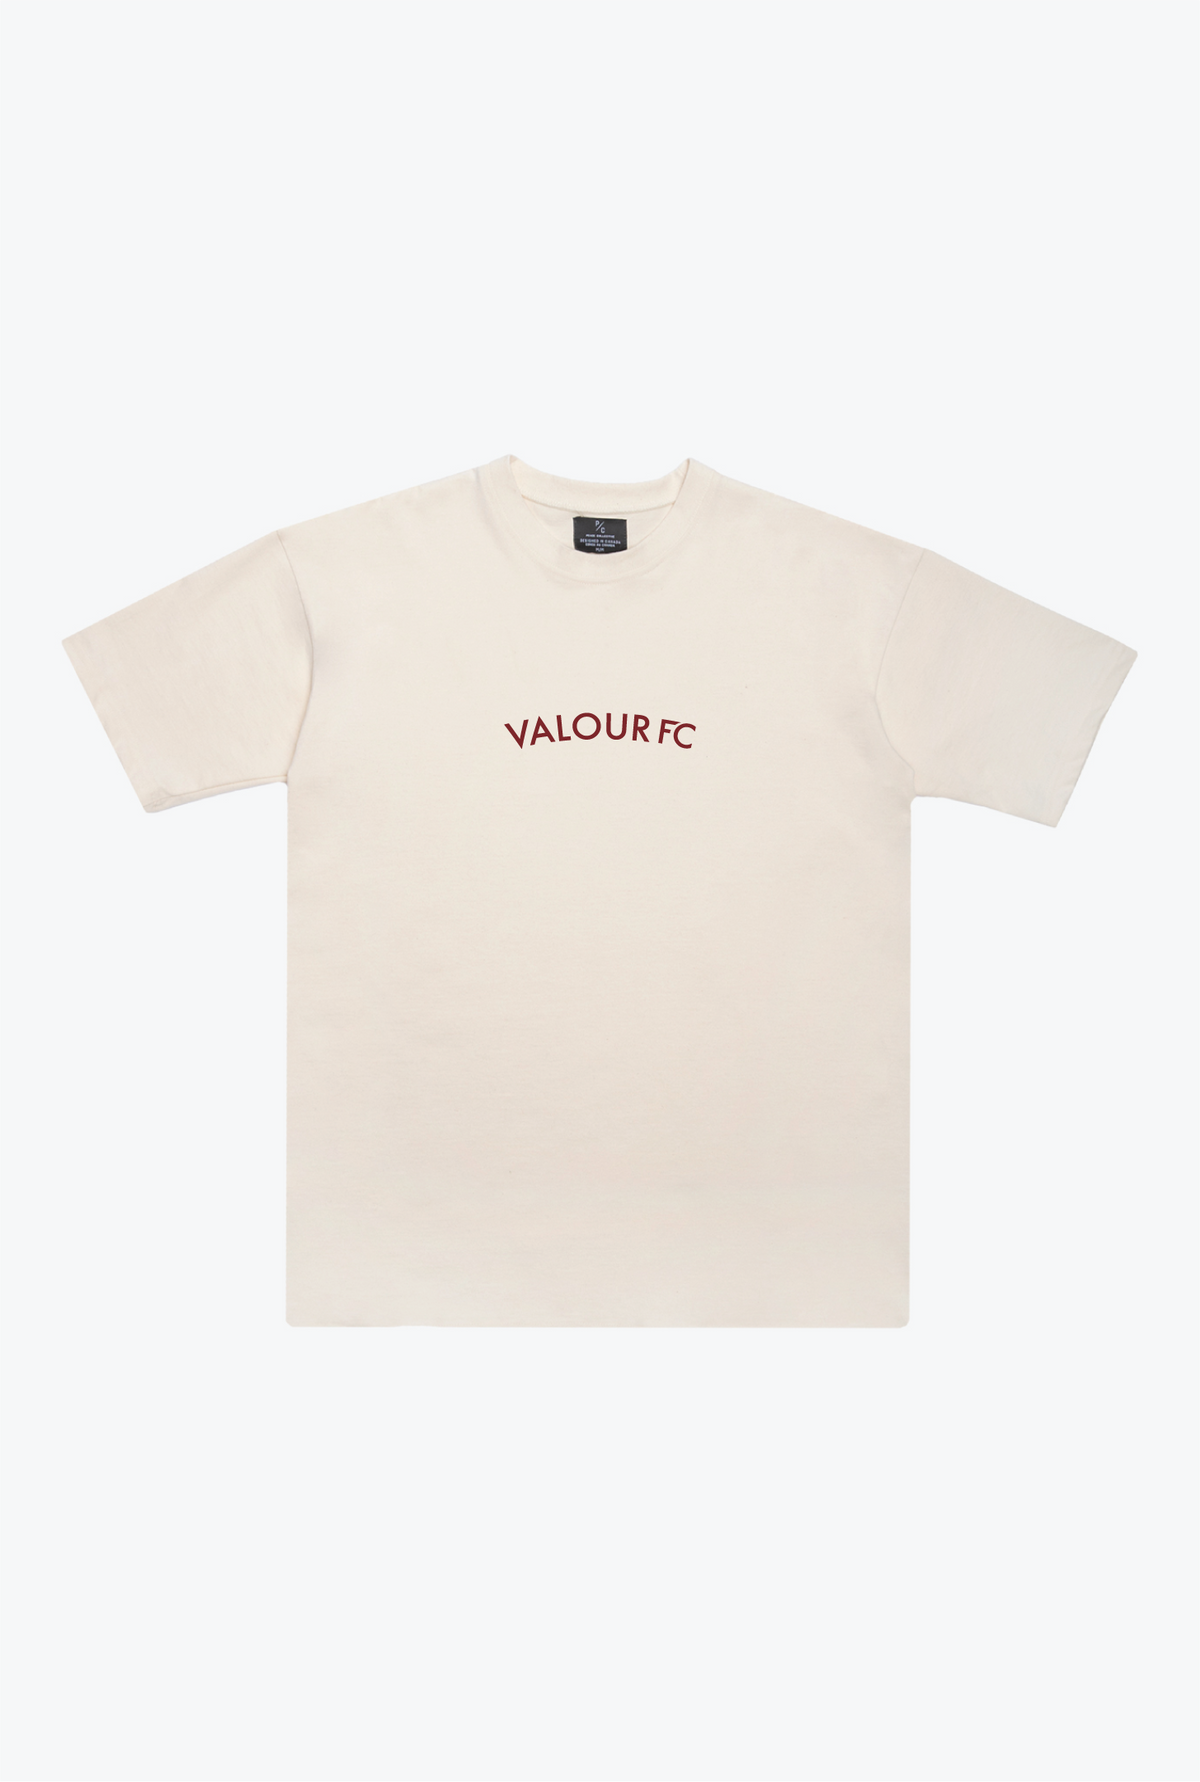 Valour FC Heavyweight T-Shirt - Ivory